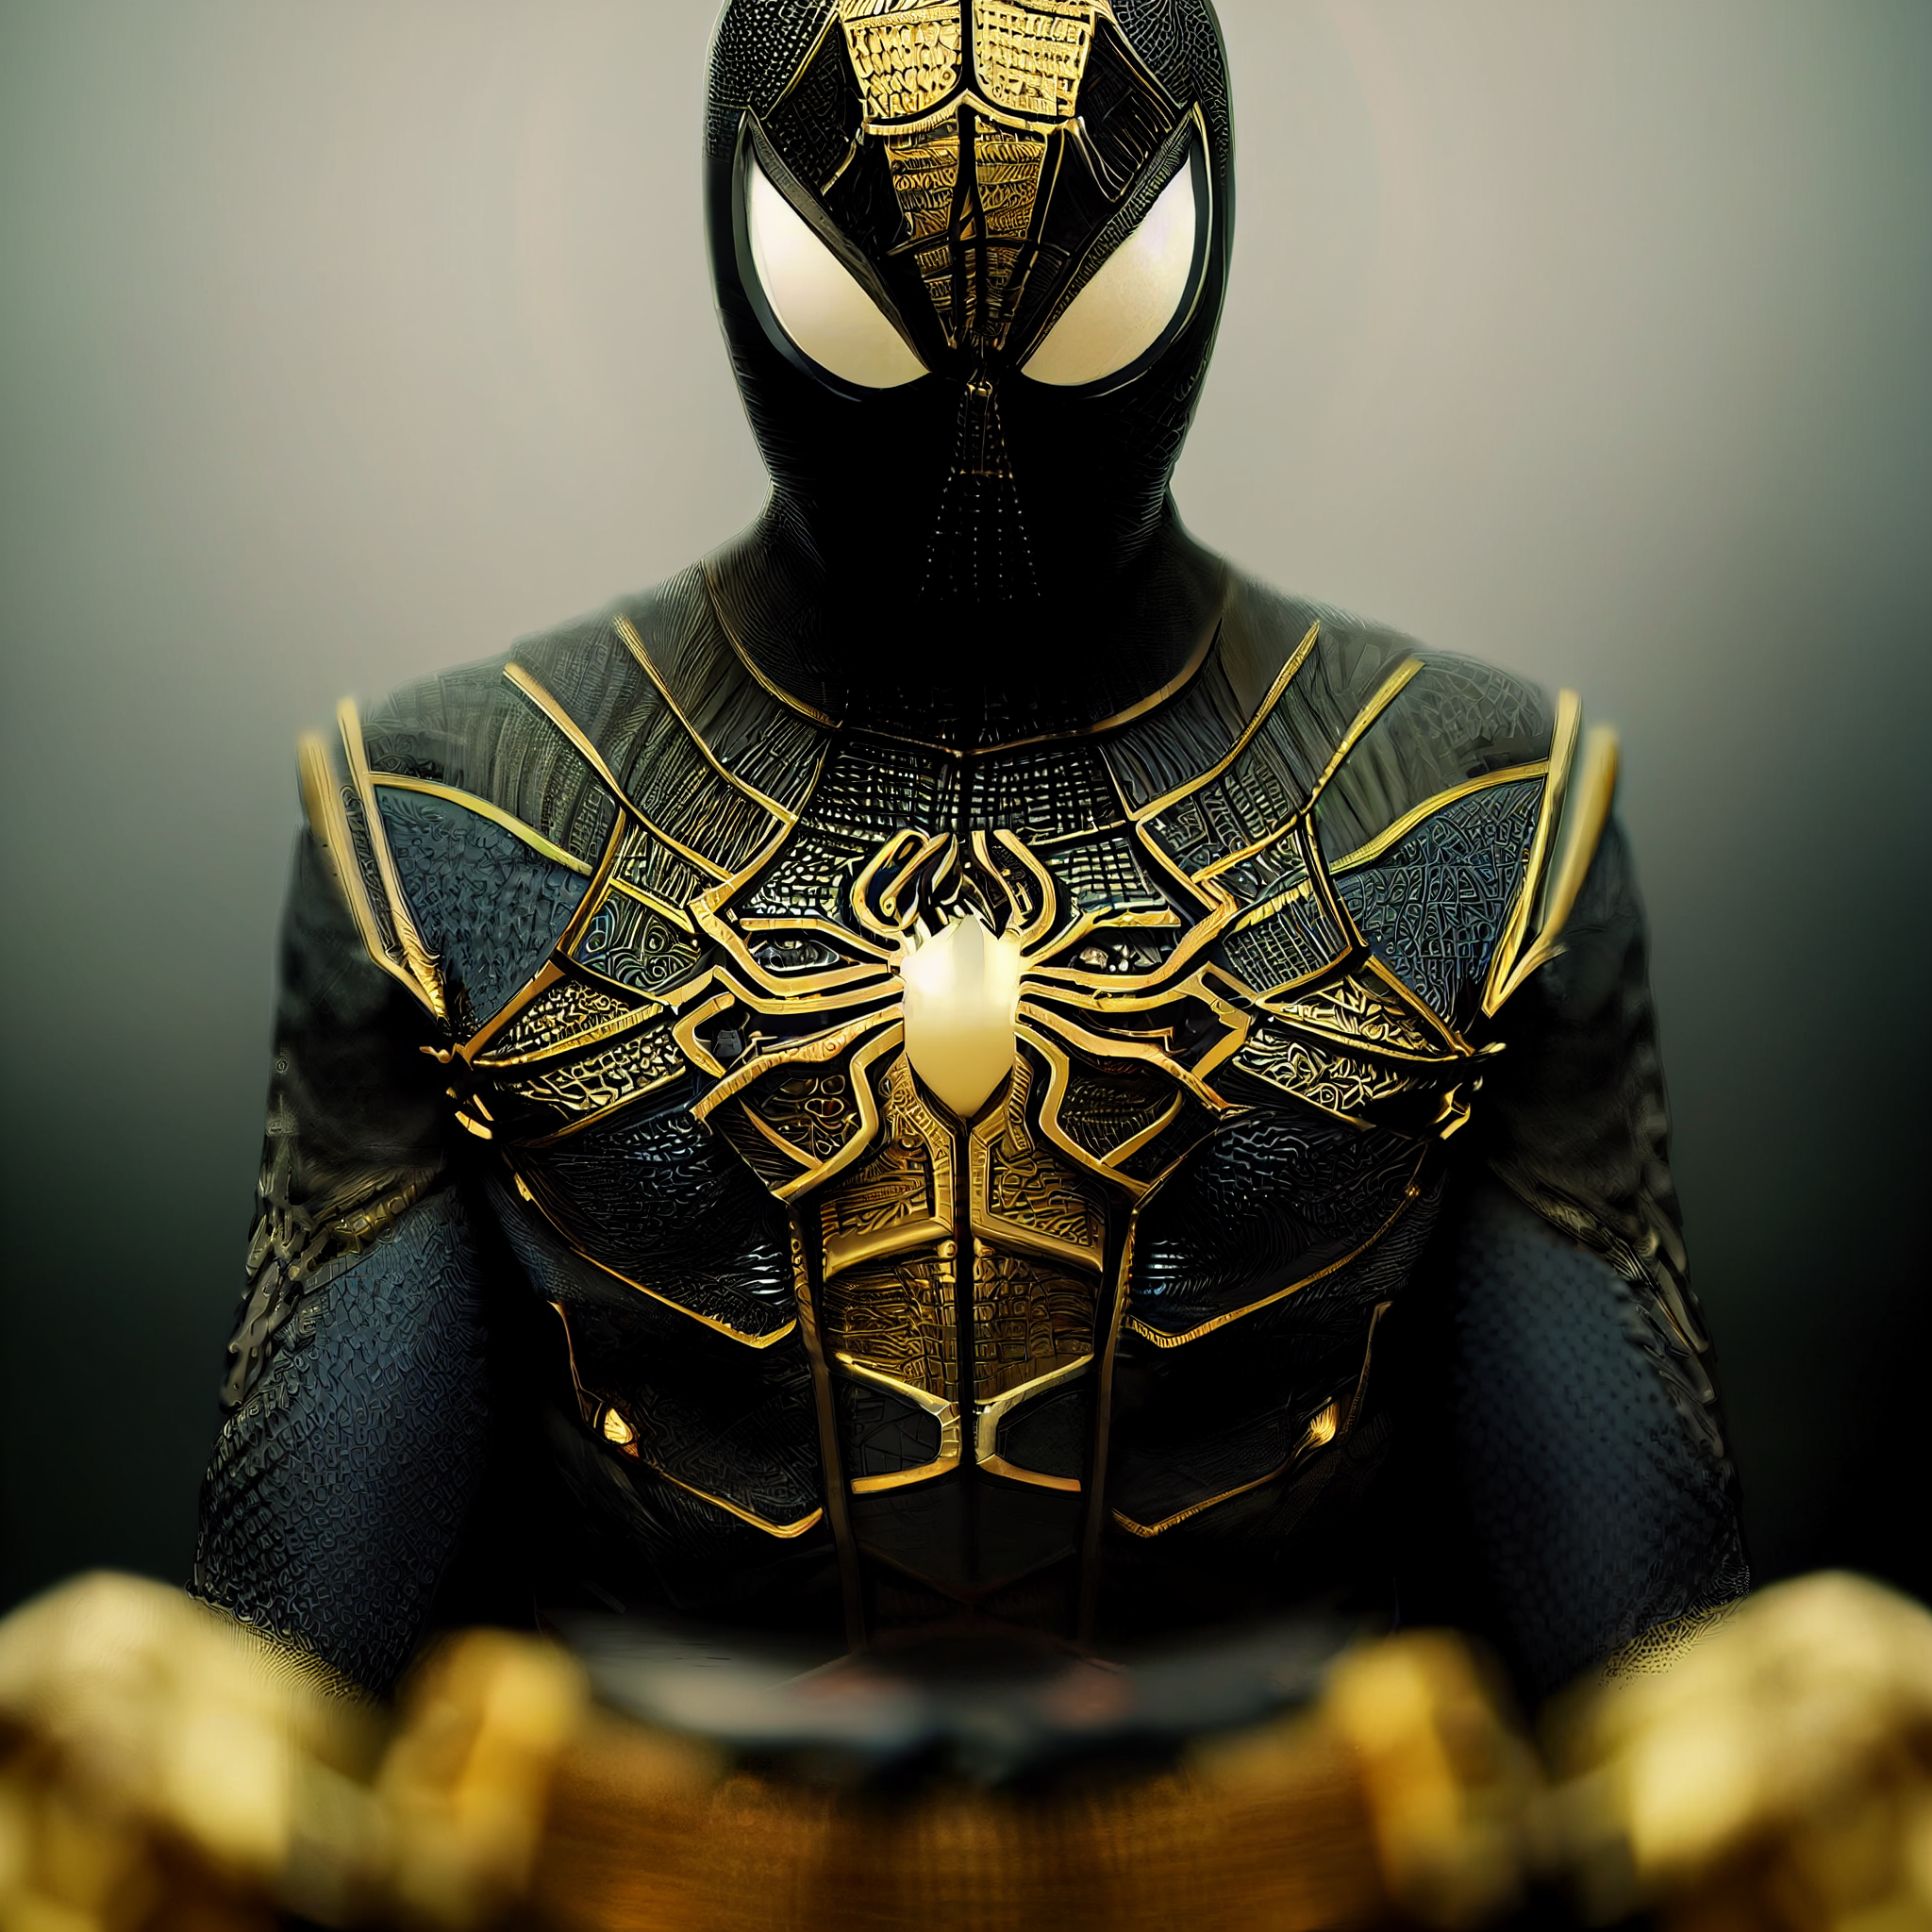 General 2048x2048 spider black gold Spider-Man superhero Marvel Comics digital art simple background